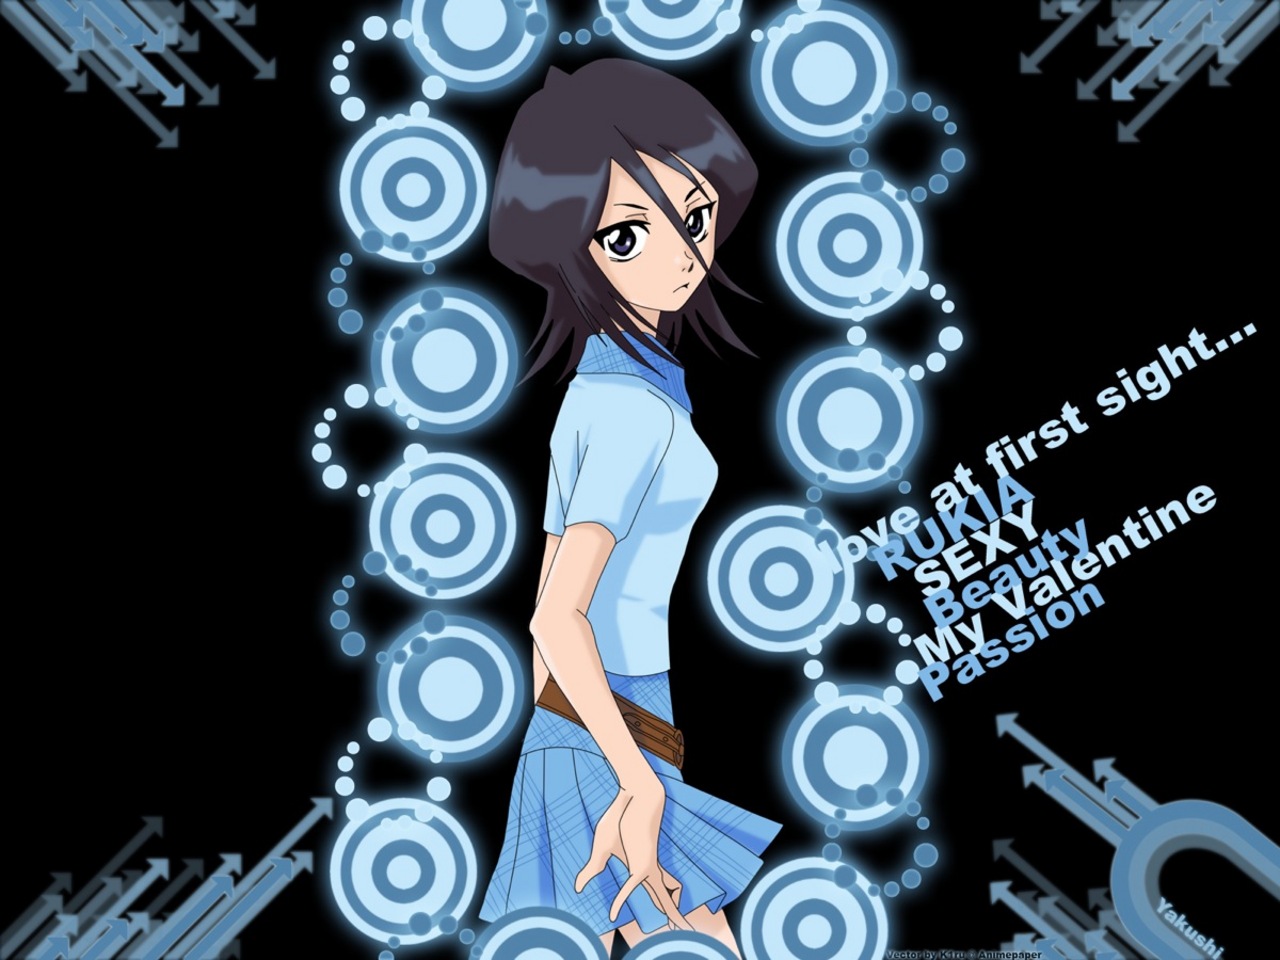 Rukia Kuchiki The First Character Of Series Created By Kubo